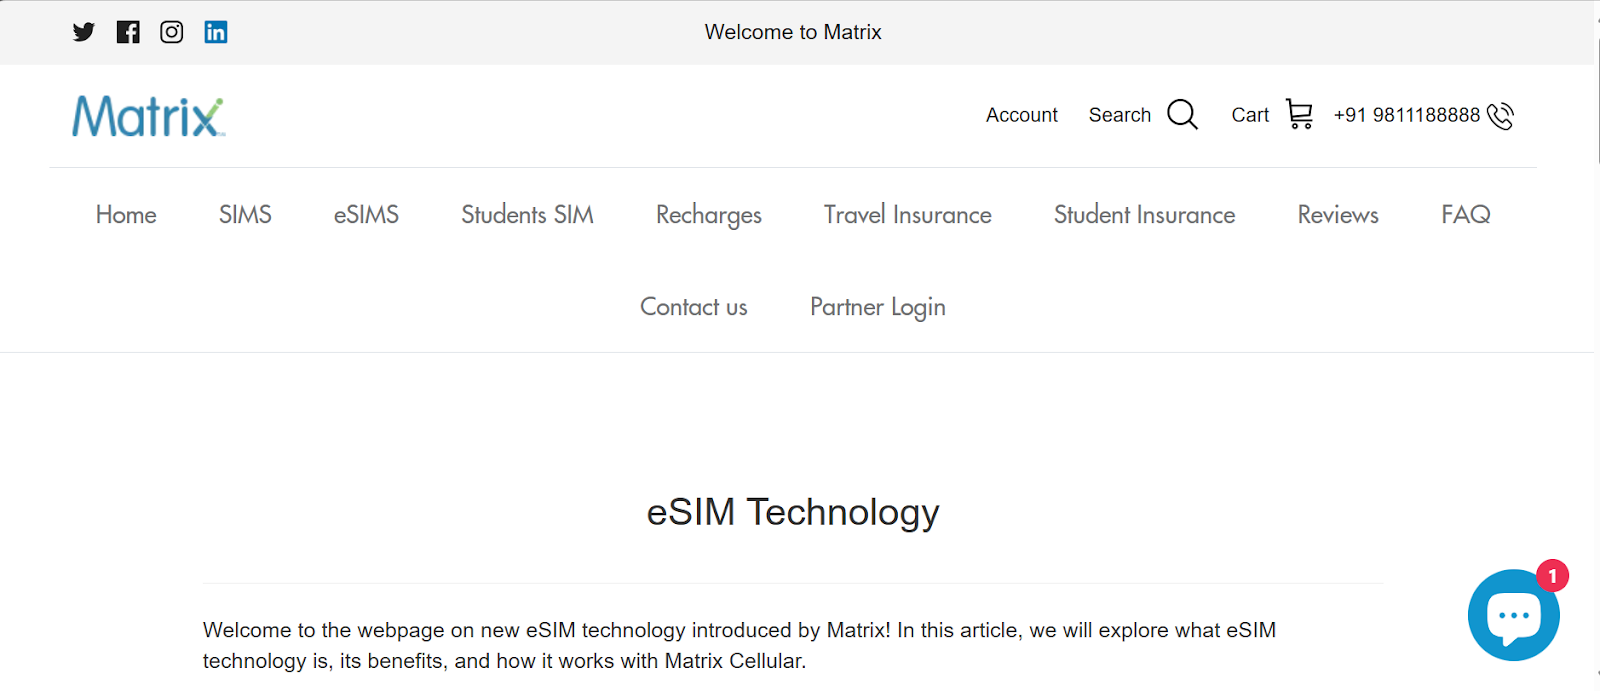 Matrix Cellular website snapshot highlighting the services it provides.